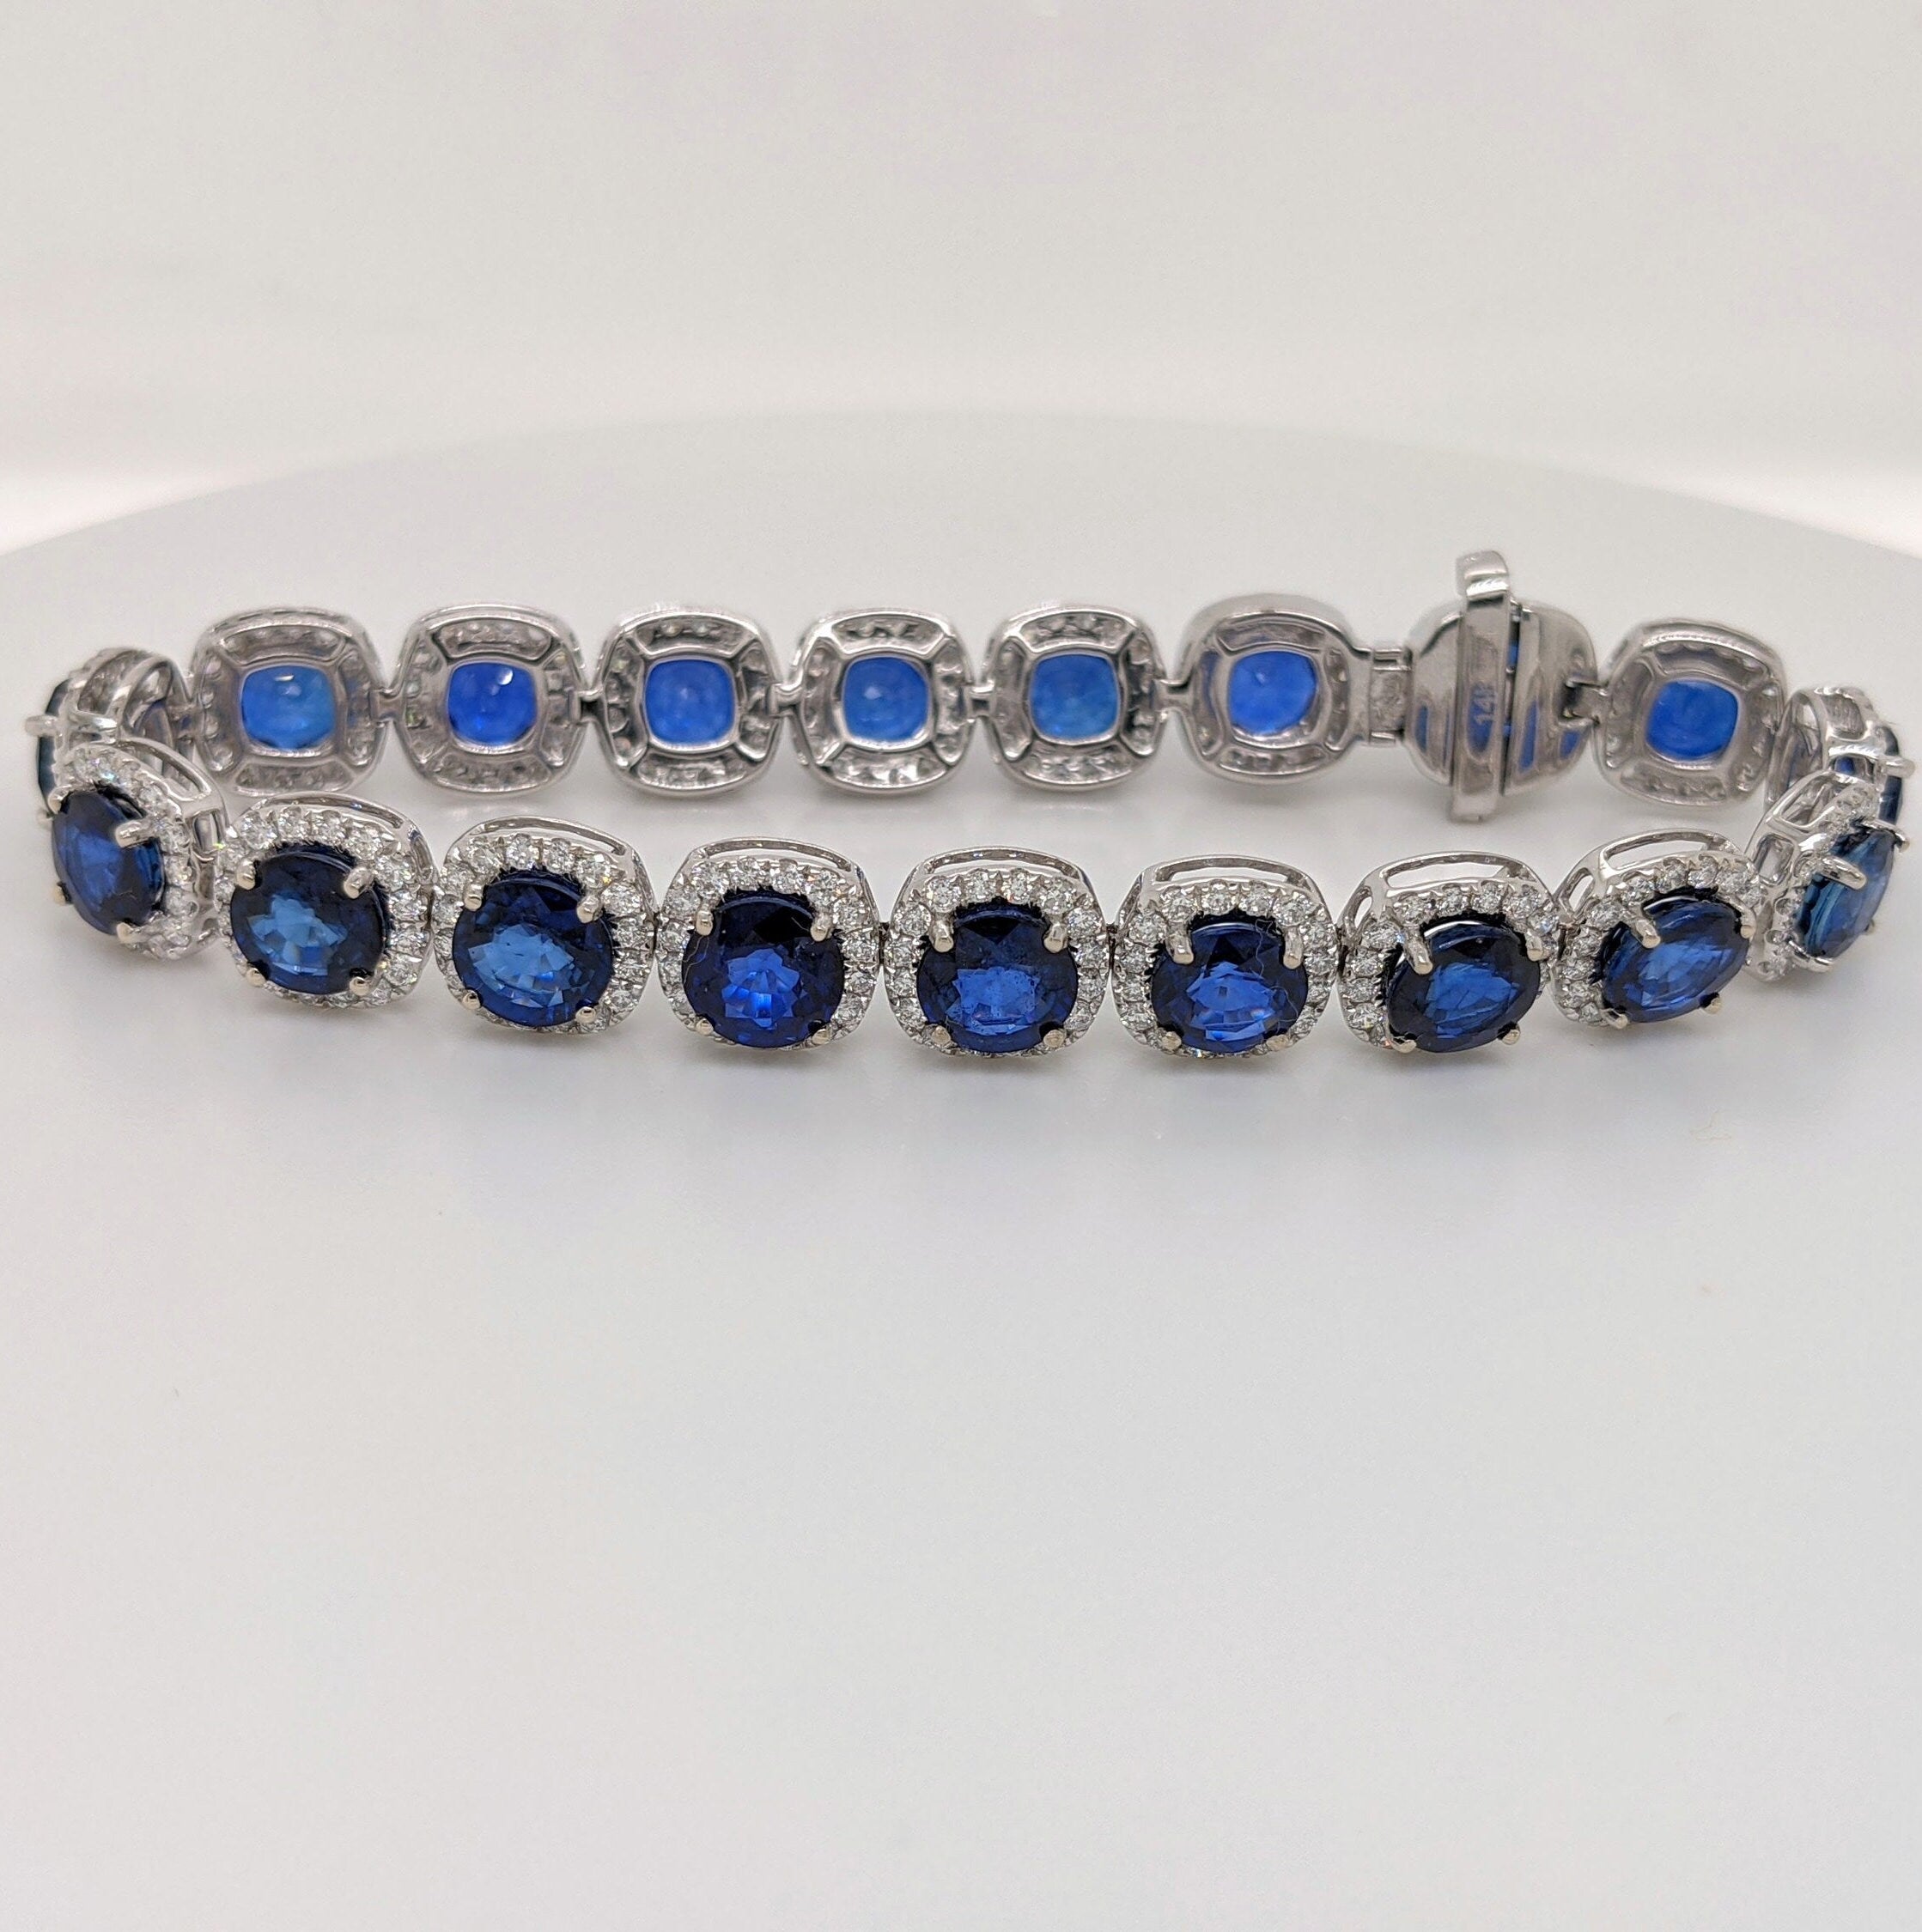 Stunning Sapphire Bracelet with Round Diamond Halo | Gemstone Tennis Bracelet in Solid 14k White Gold | 6mm Blue Gemstone | Ready to Ship!!!